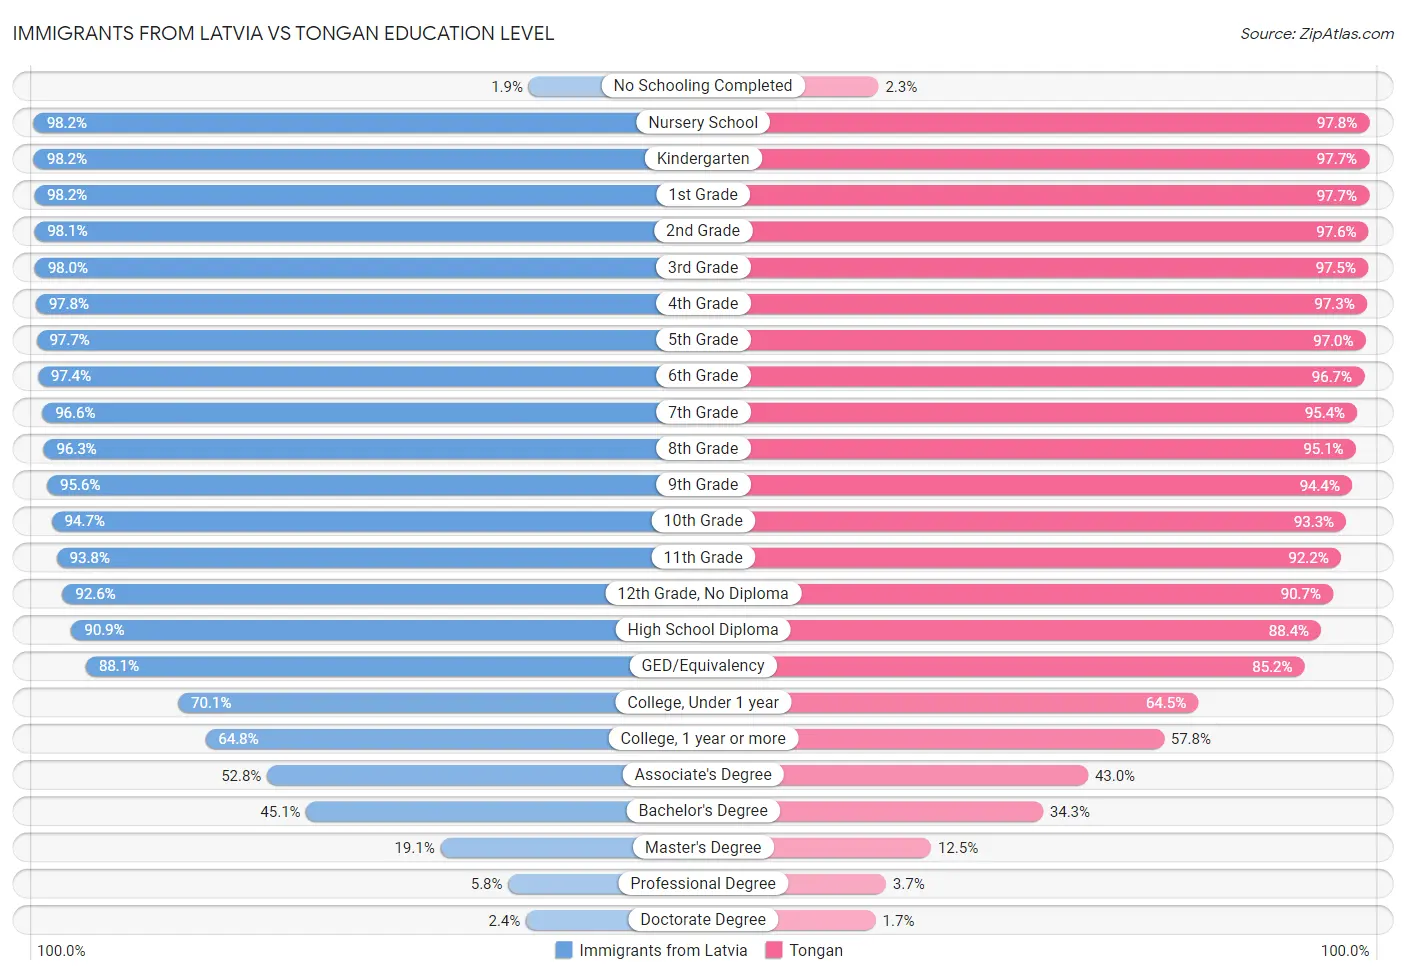 Immigrants from Latvia vs Tongan Education Level